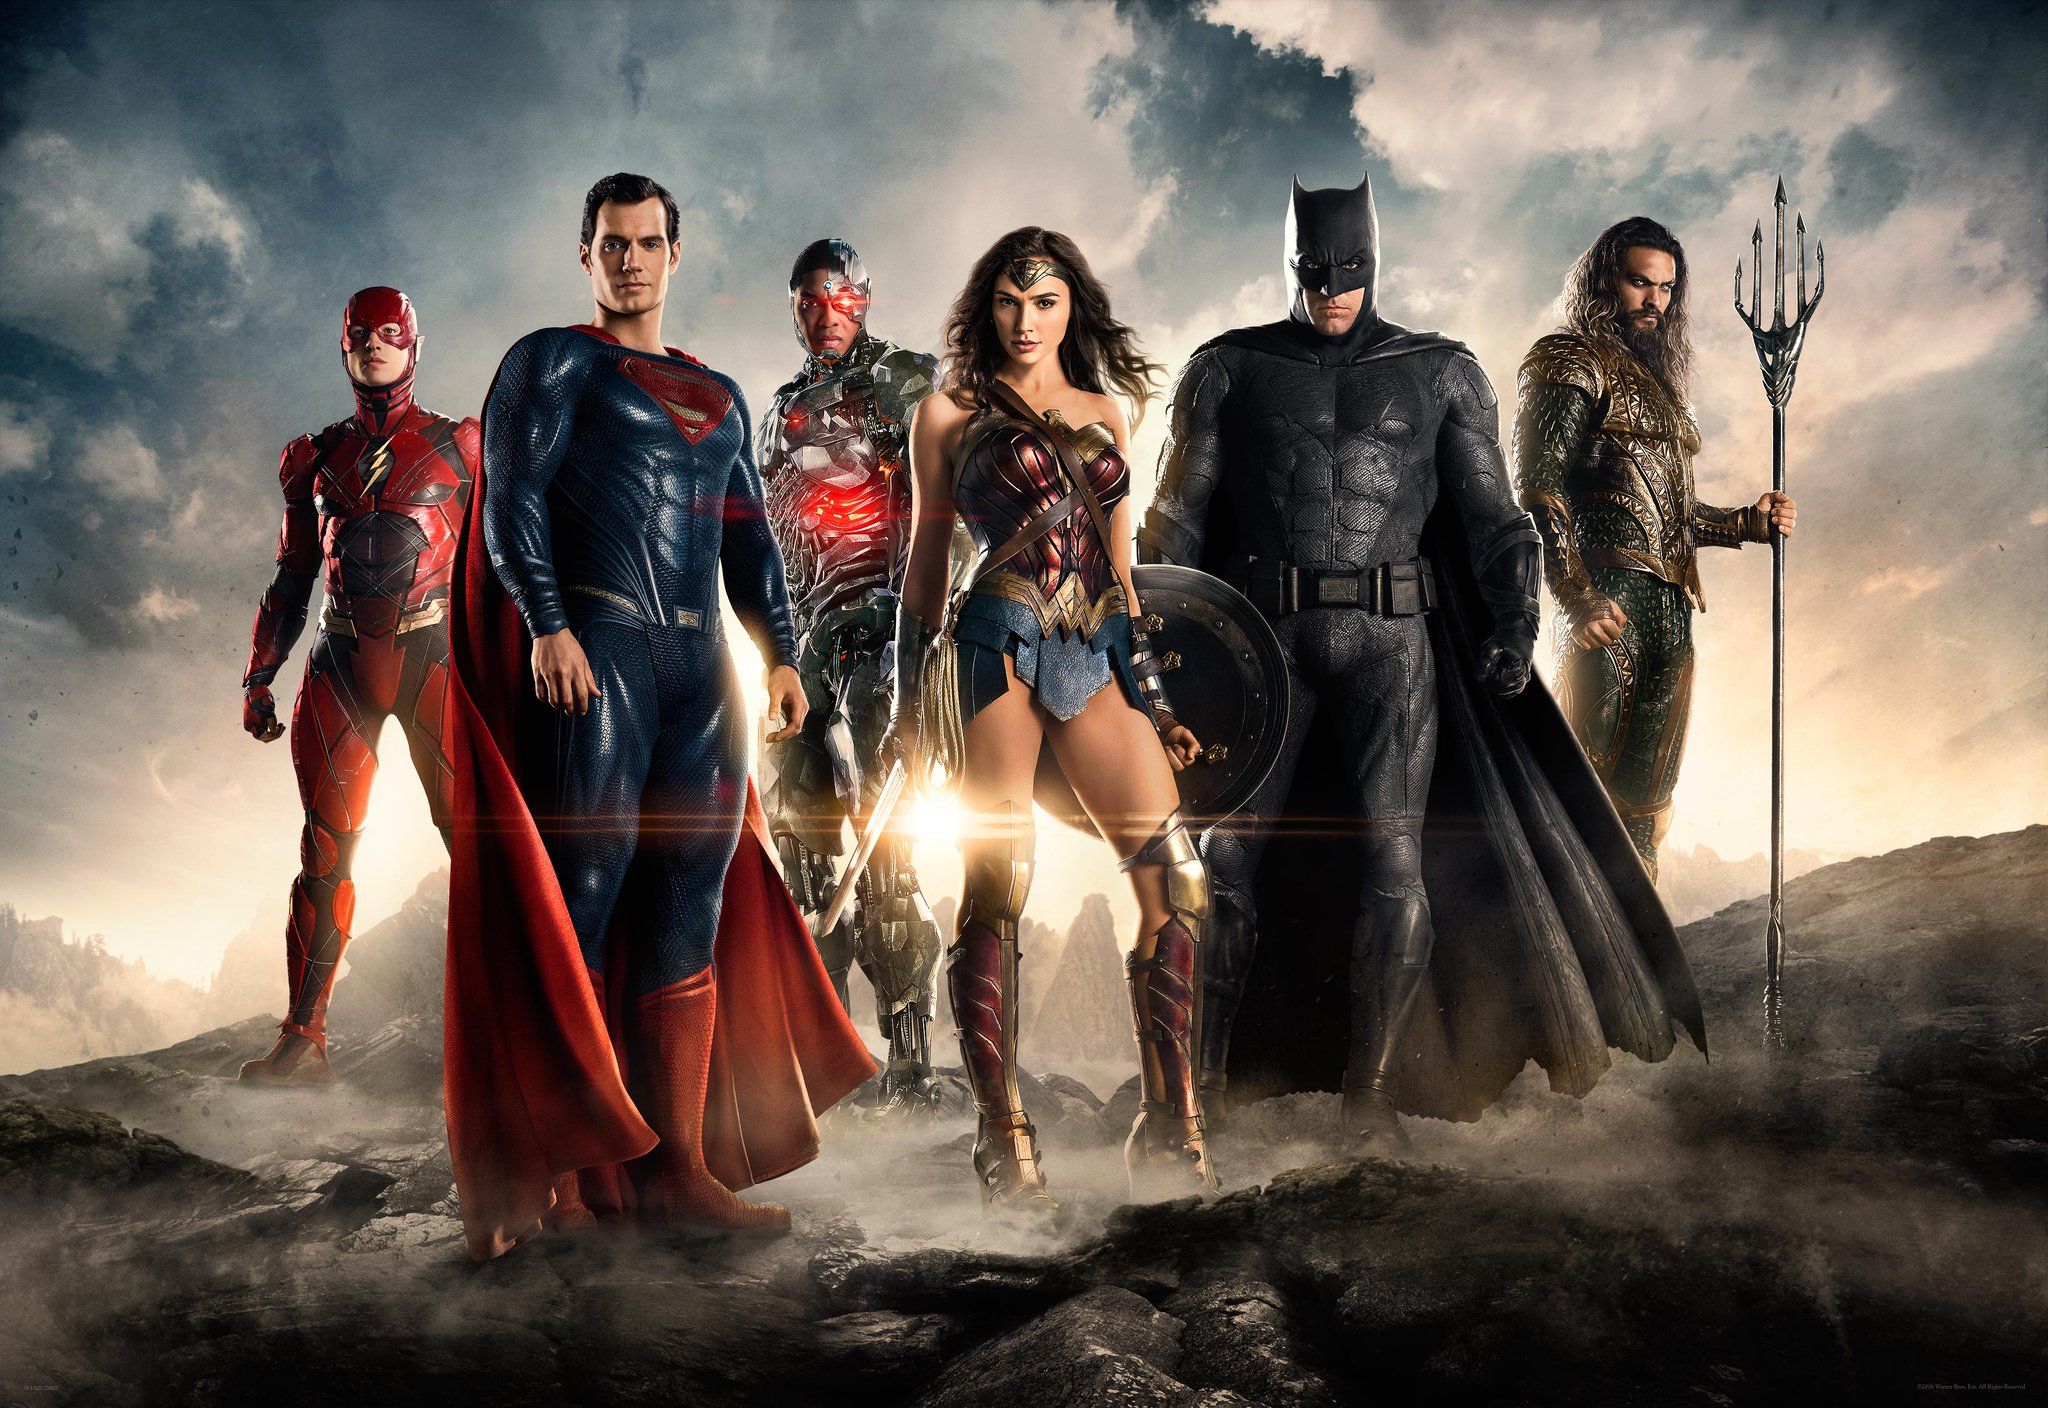 Justice League (2017) Official image